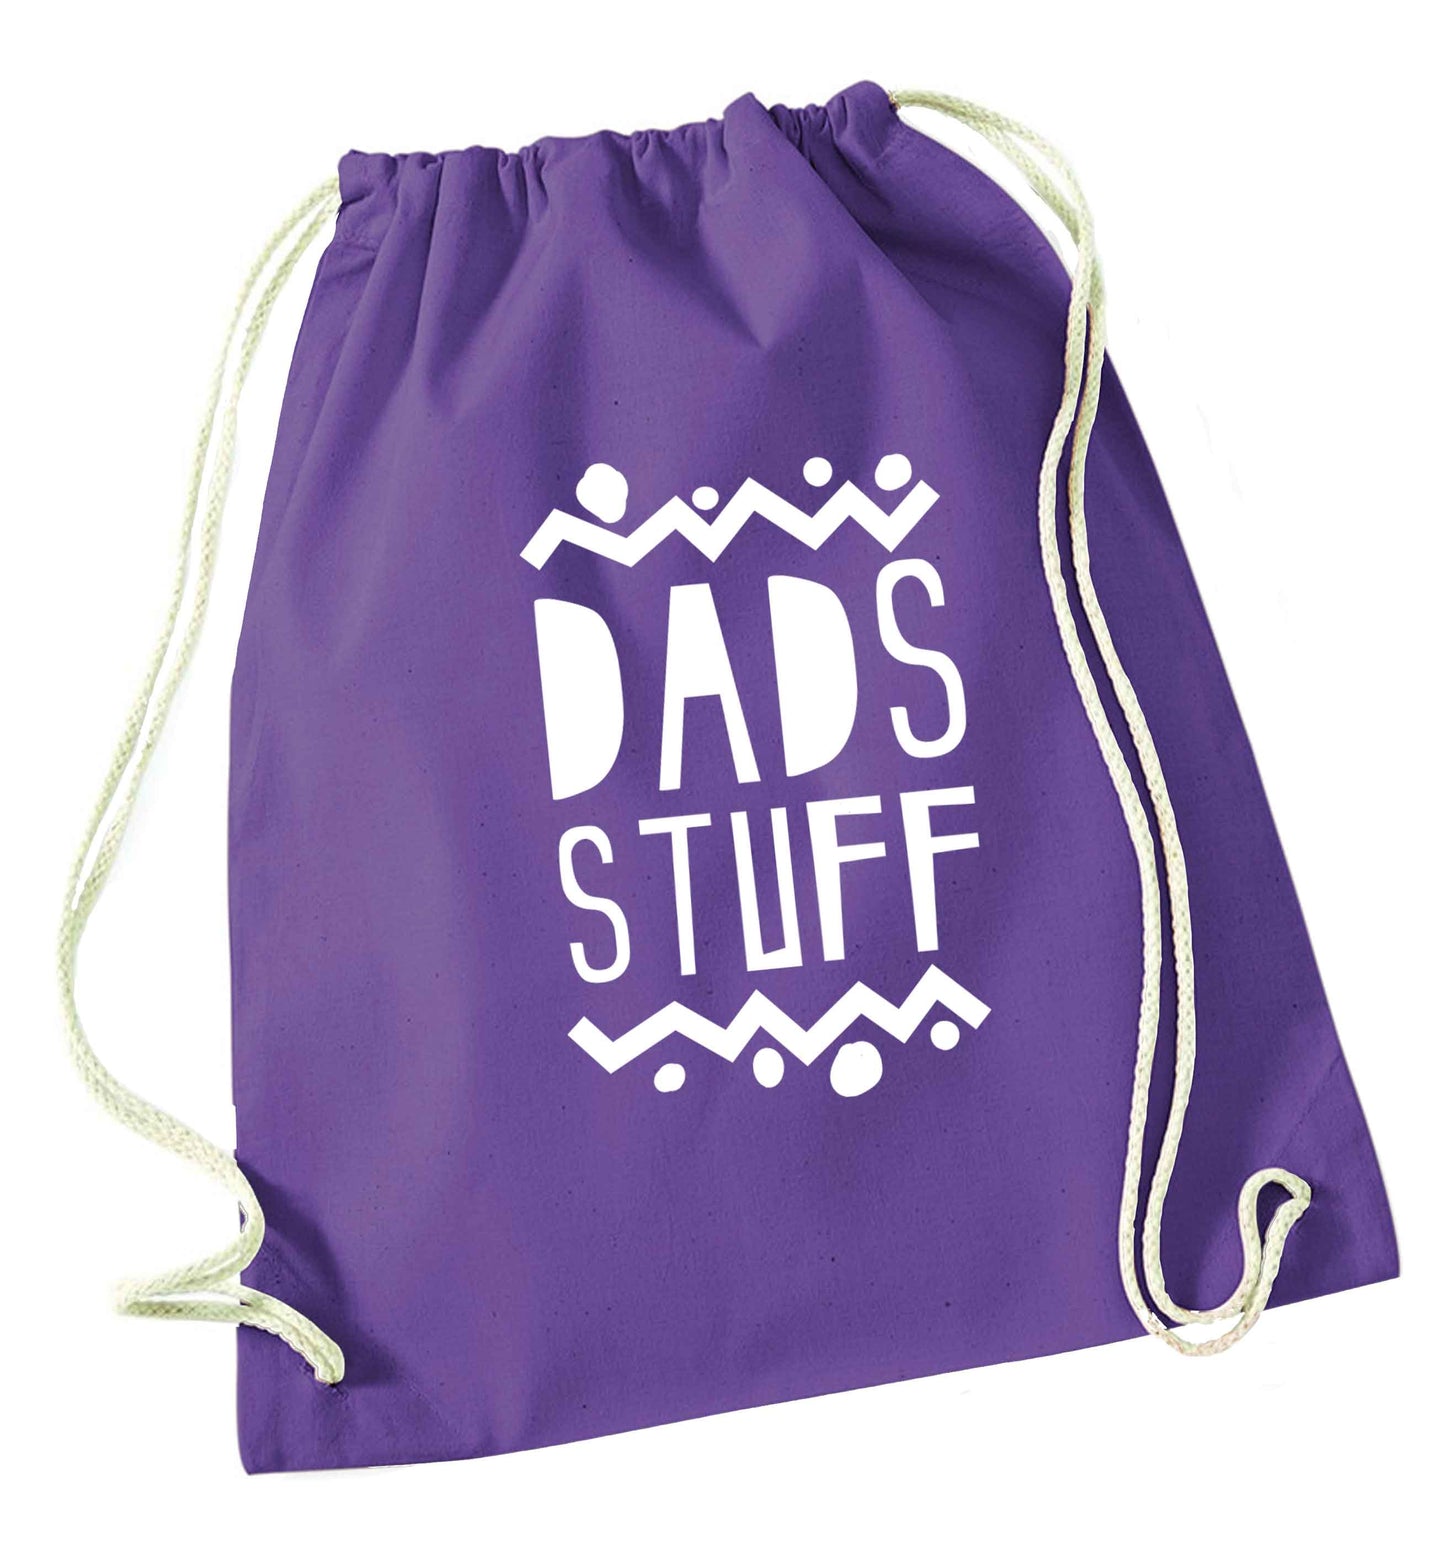 Dads stuff purple drawstring bag